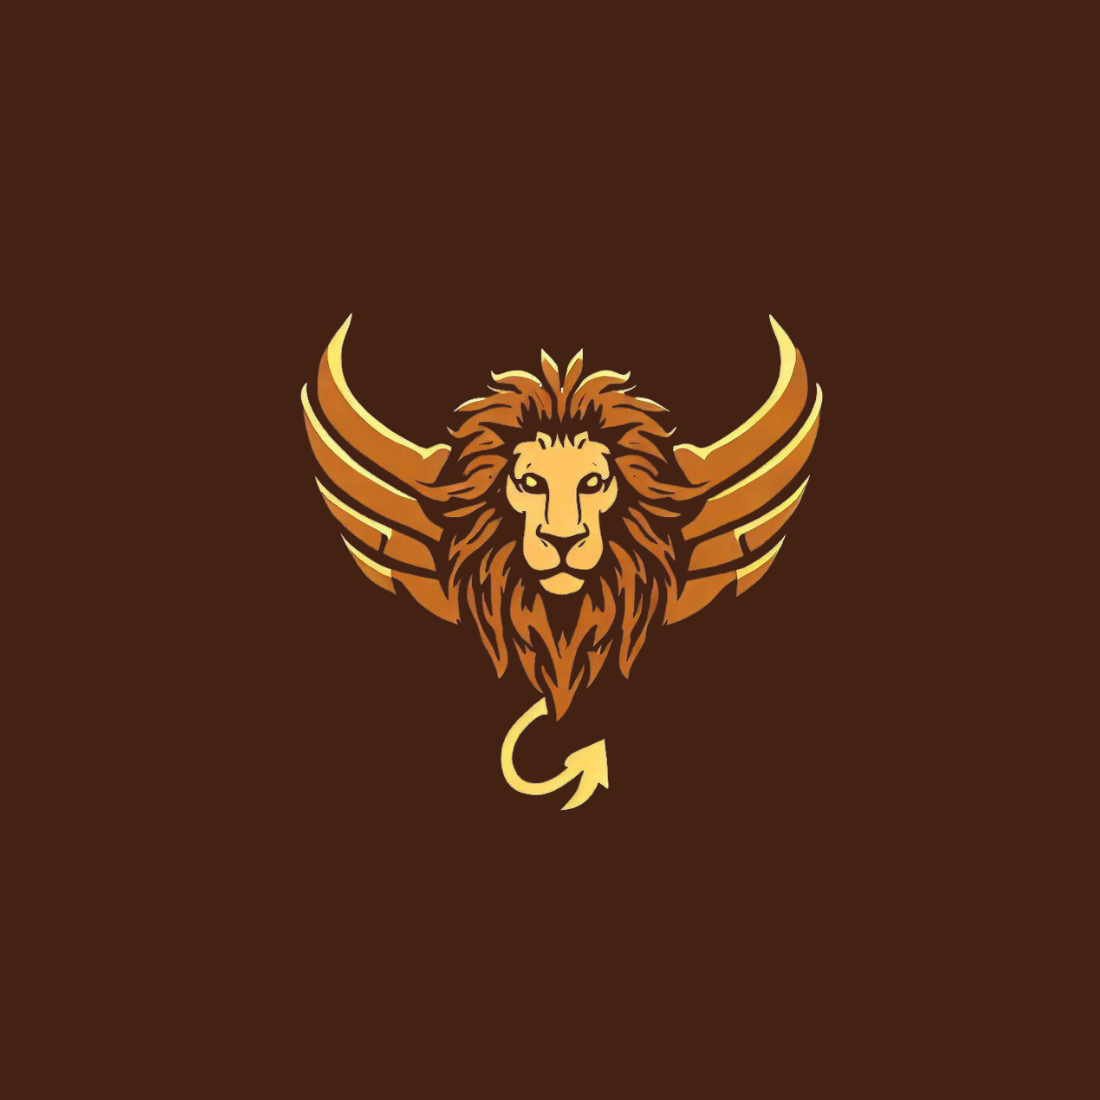 Lion logo preview image.